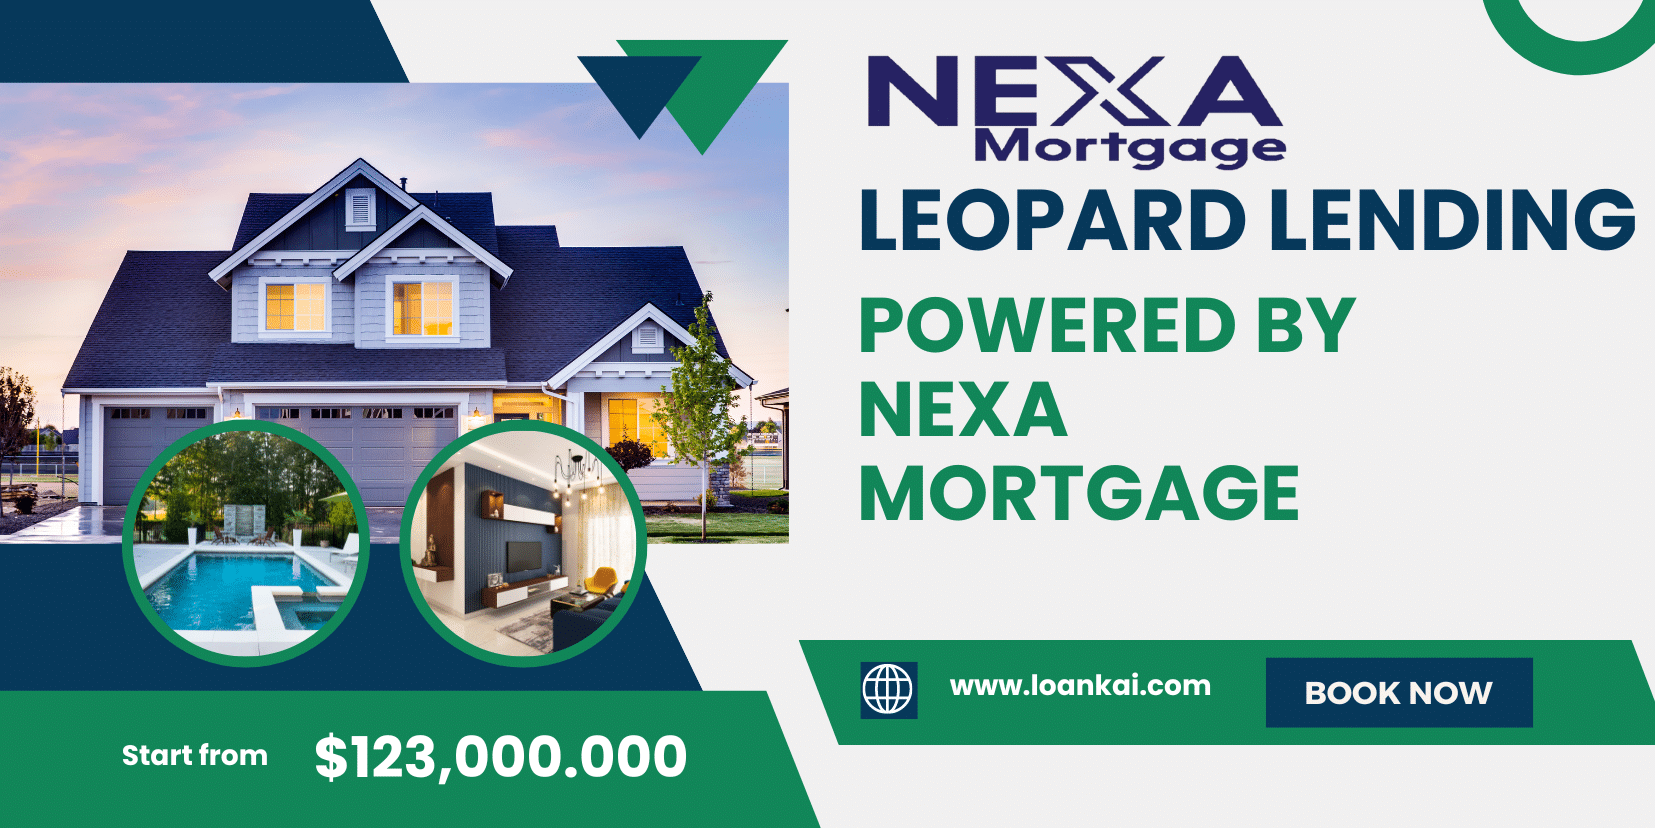 Leopard lending powered by nexa mortgage